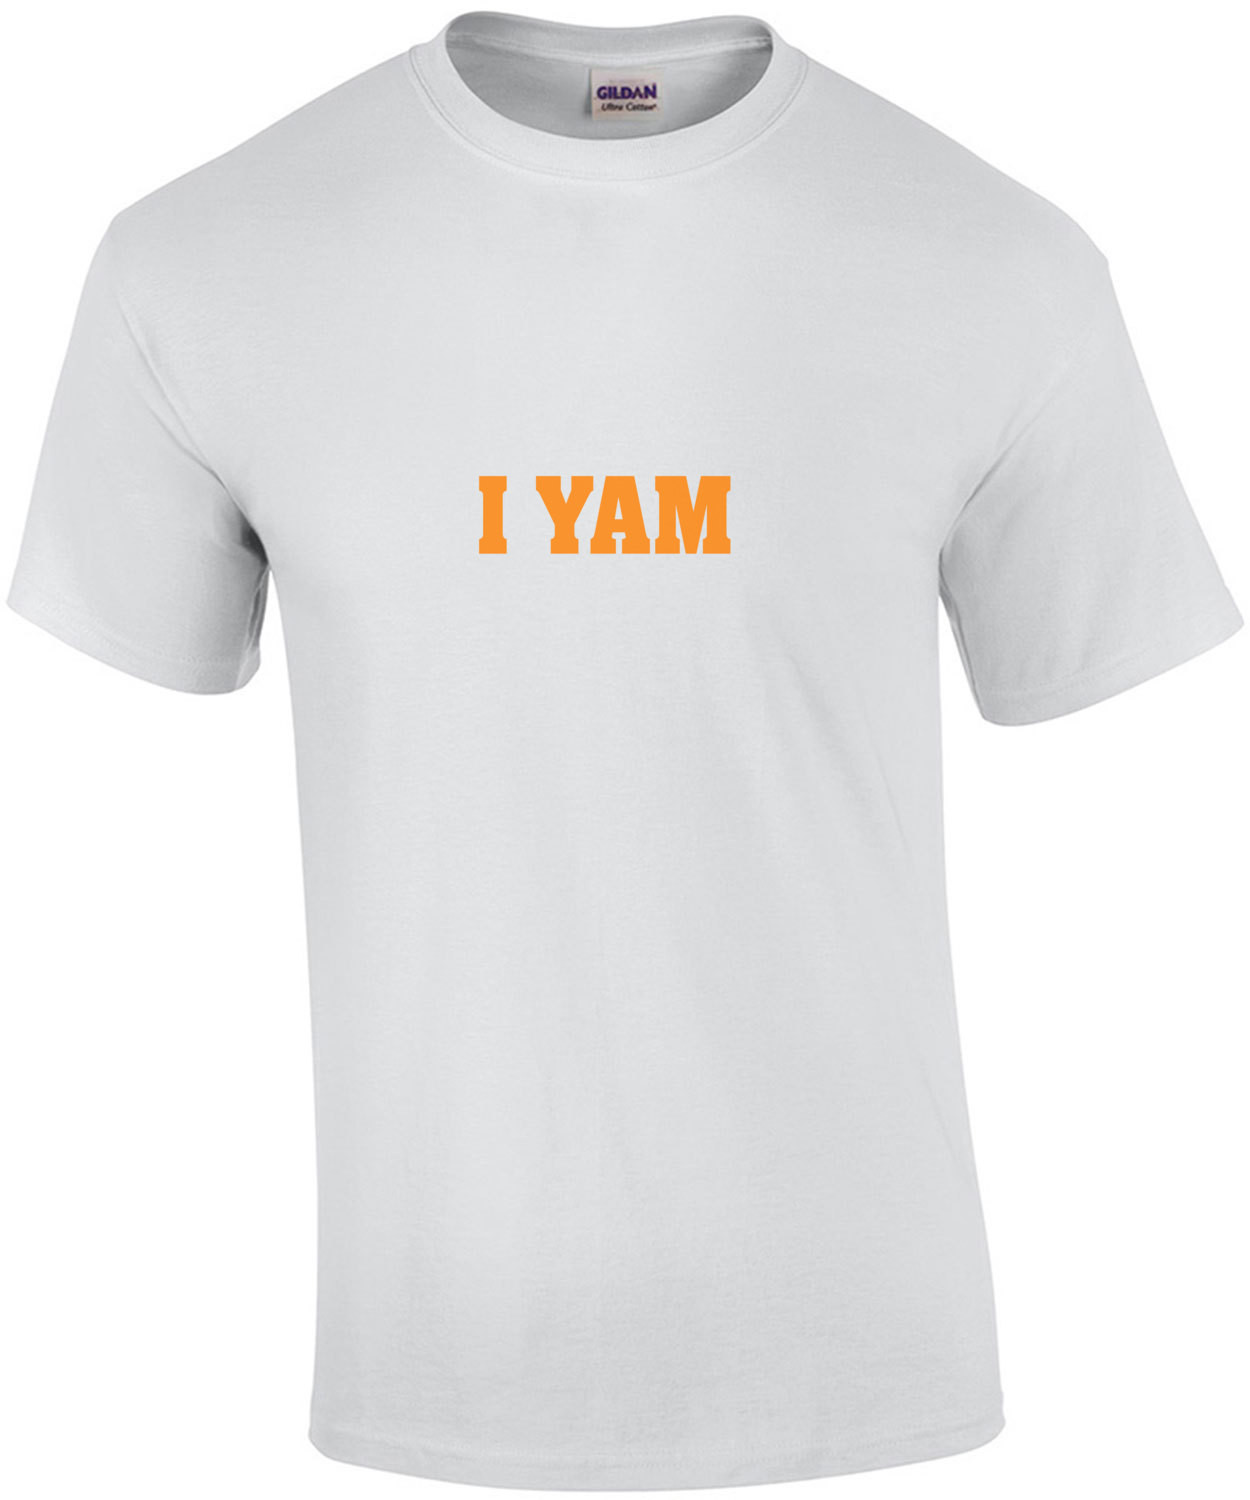 I YAM. Funny Couple's T-shirt